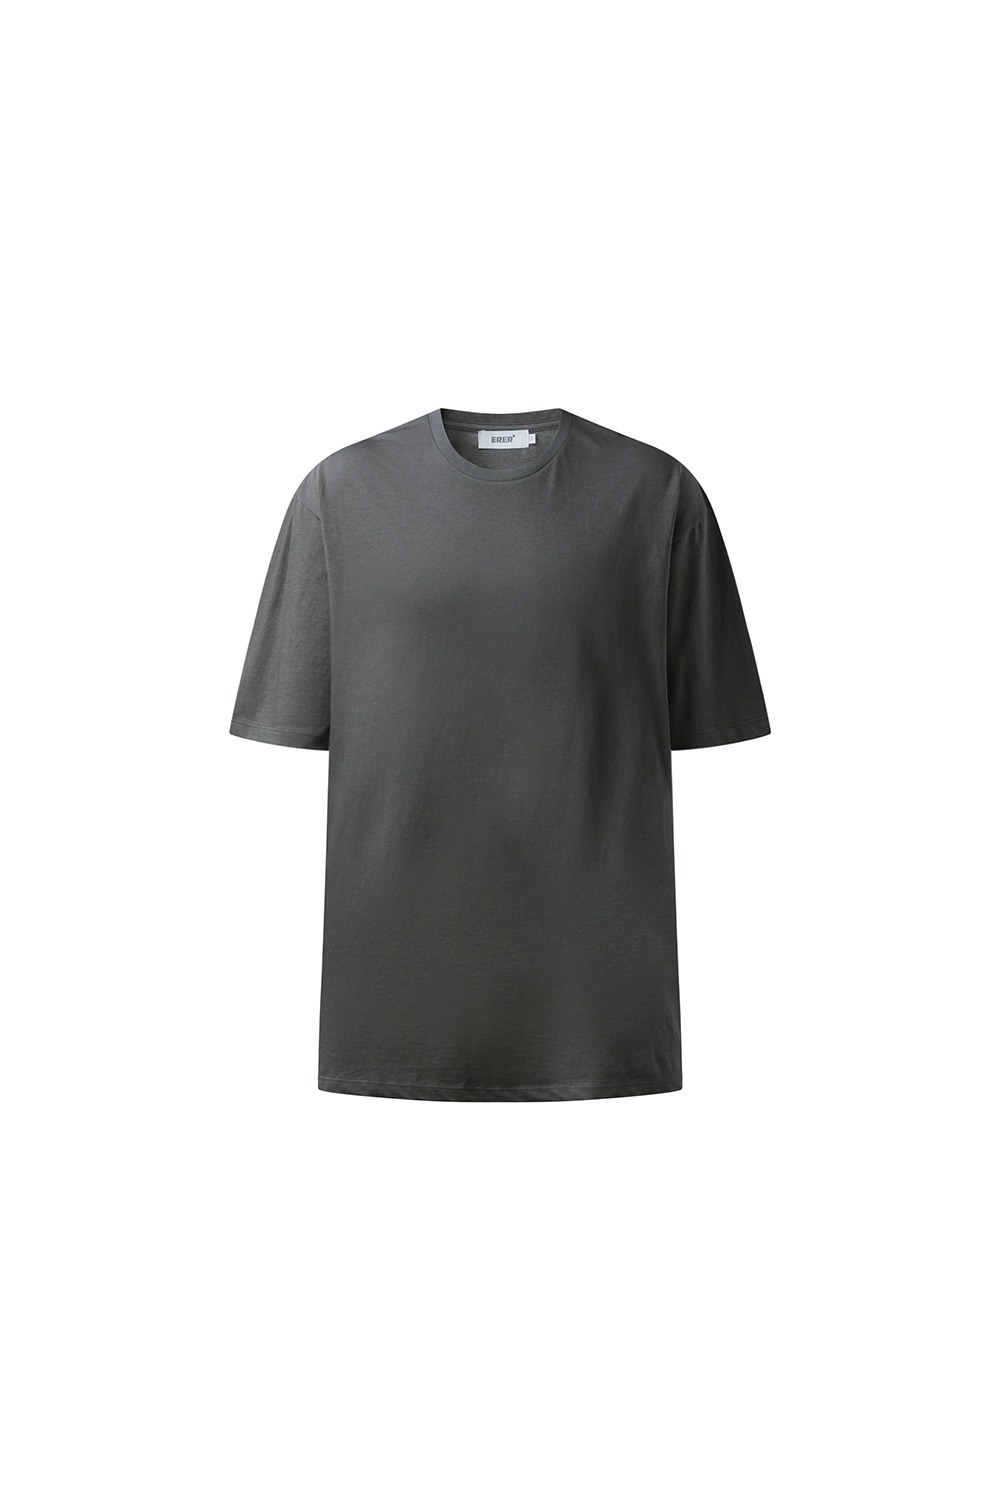 [M]Hokulani t-shirt - Charcoal